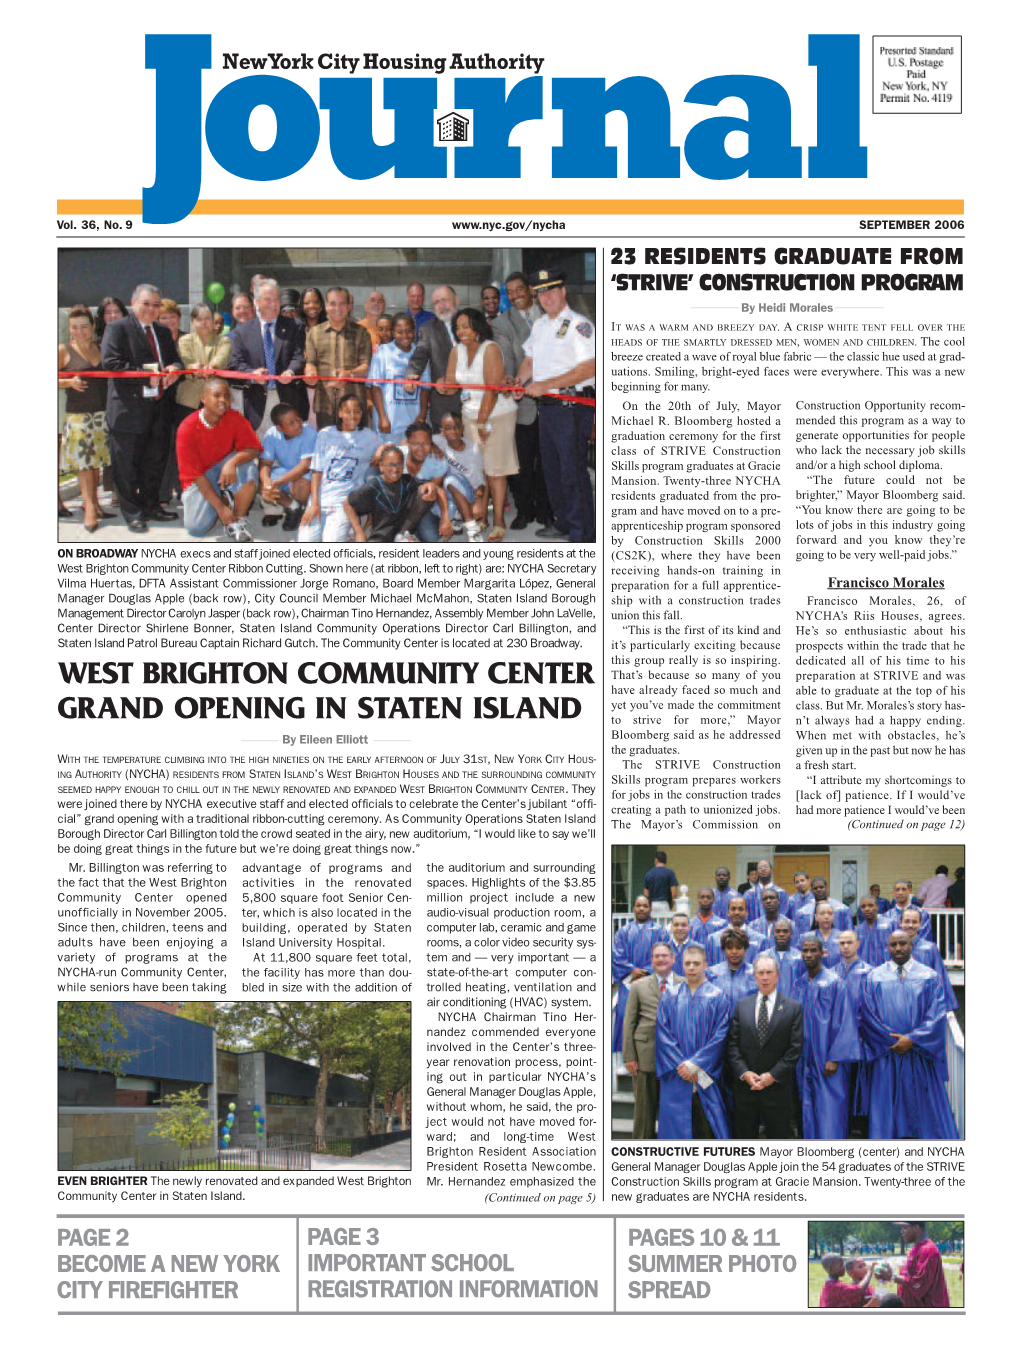 West Brighton Community Center Grand Opening in Staten Island